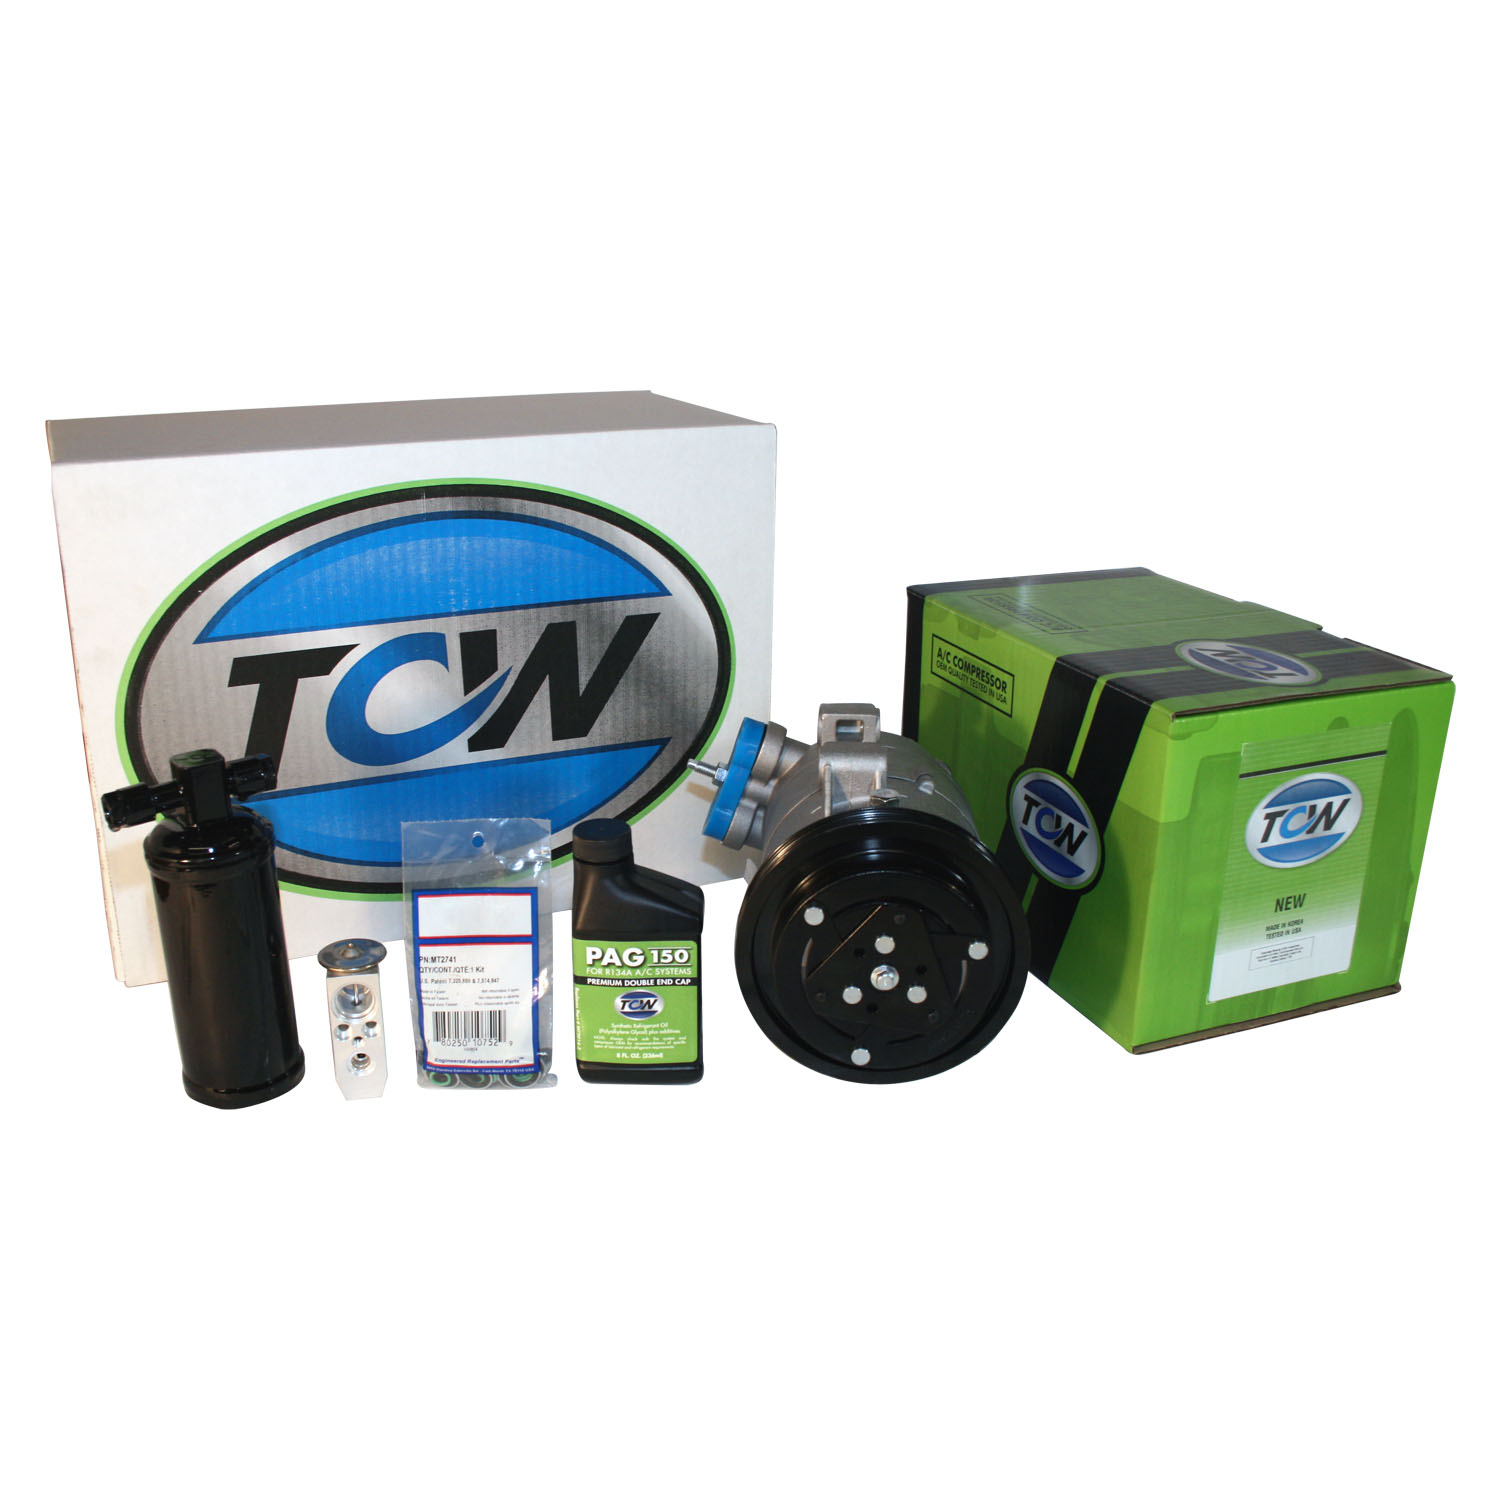 TCW Vehicle A/C Kit K1000371N New Product Image field_60b6a13a6e67c